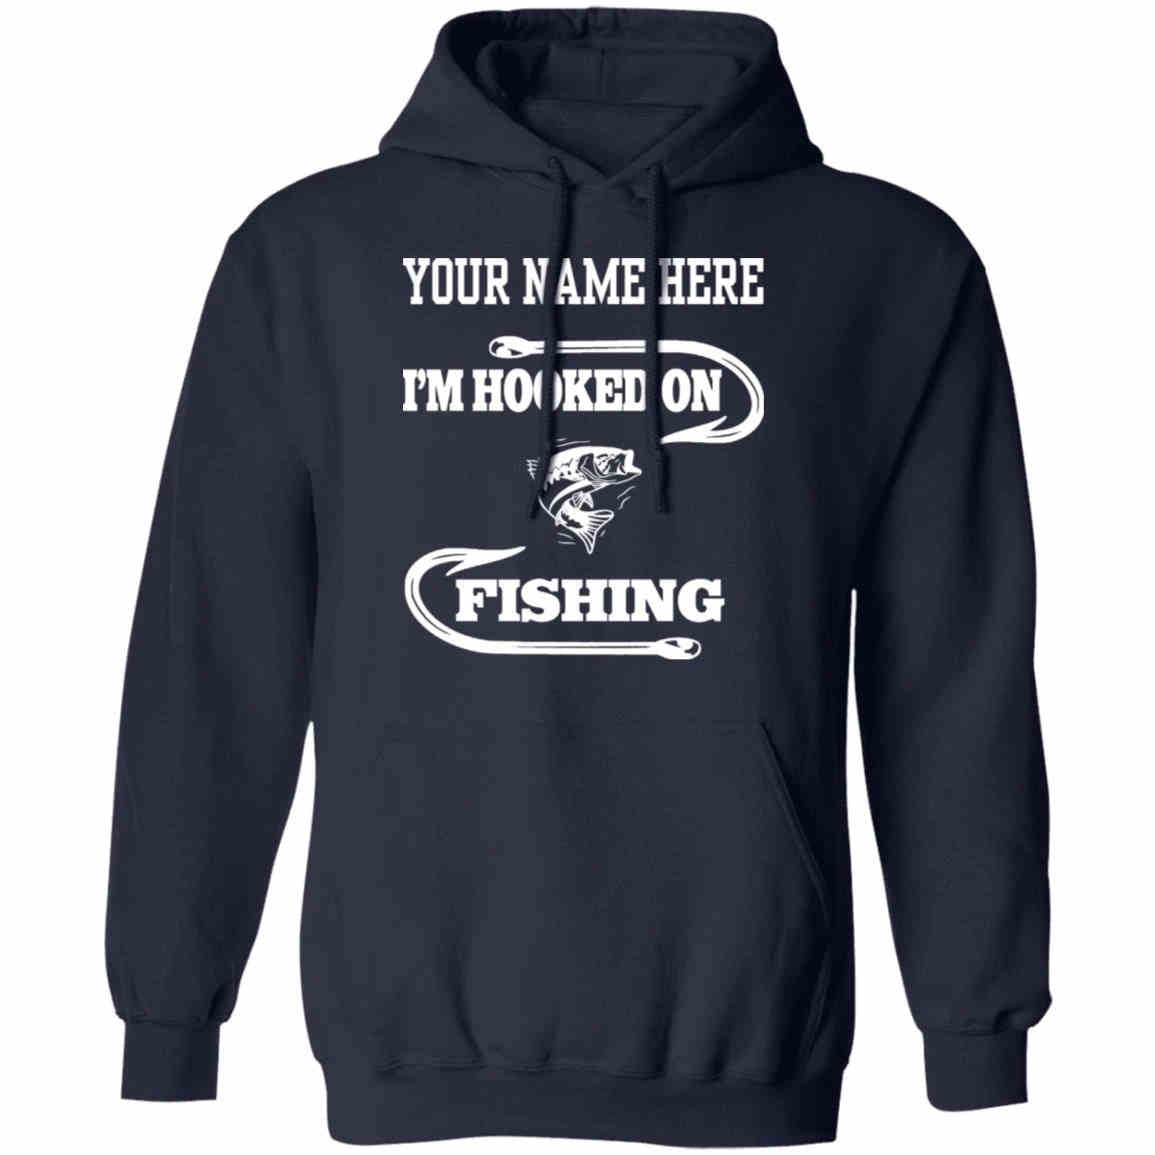 I'm hooked on fishing hoodie navy